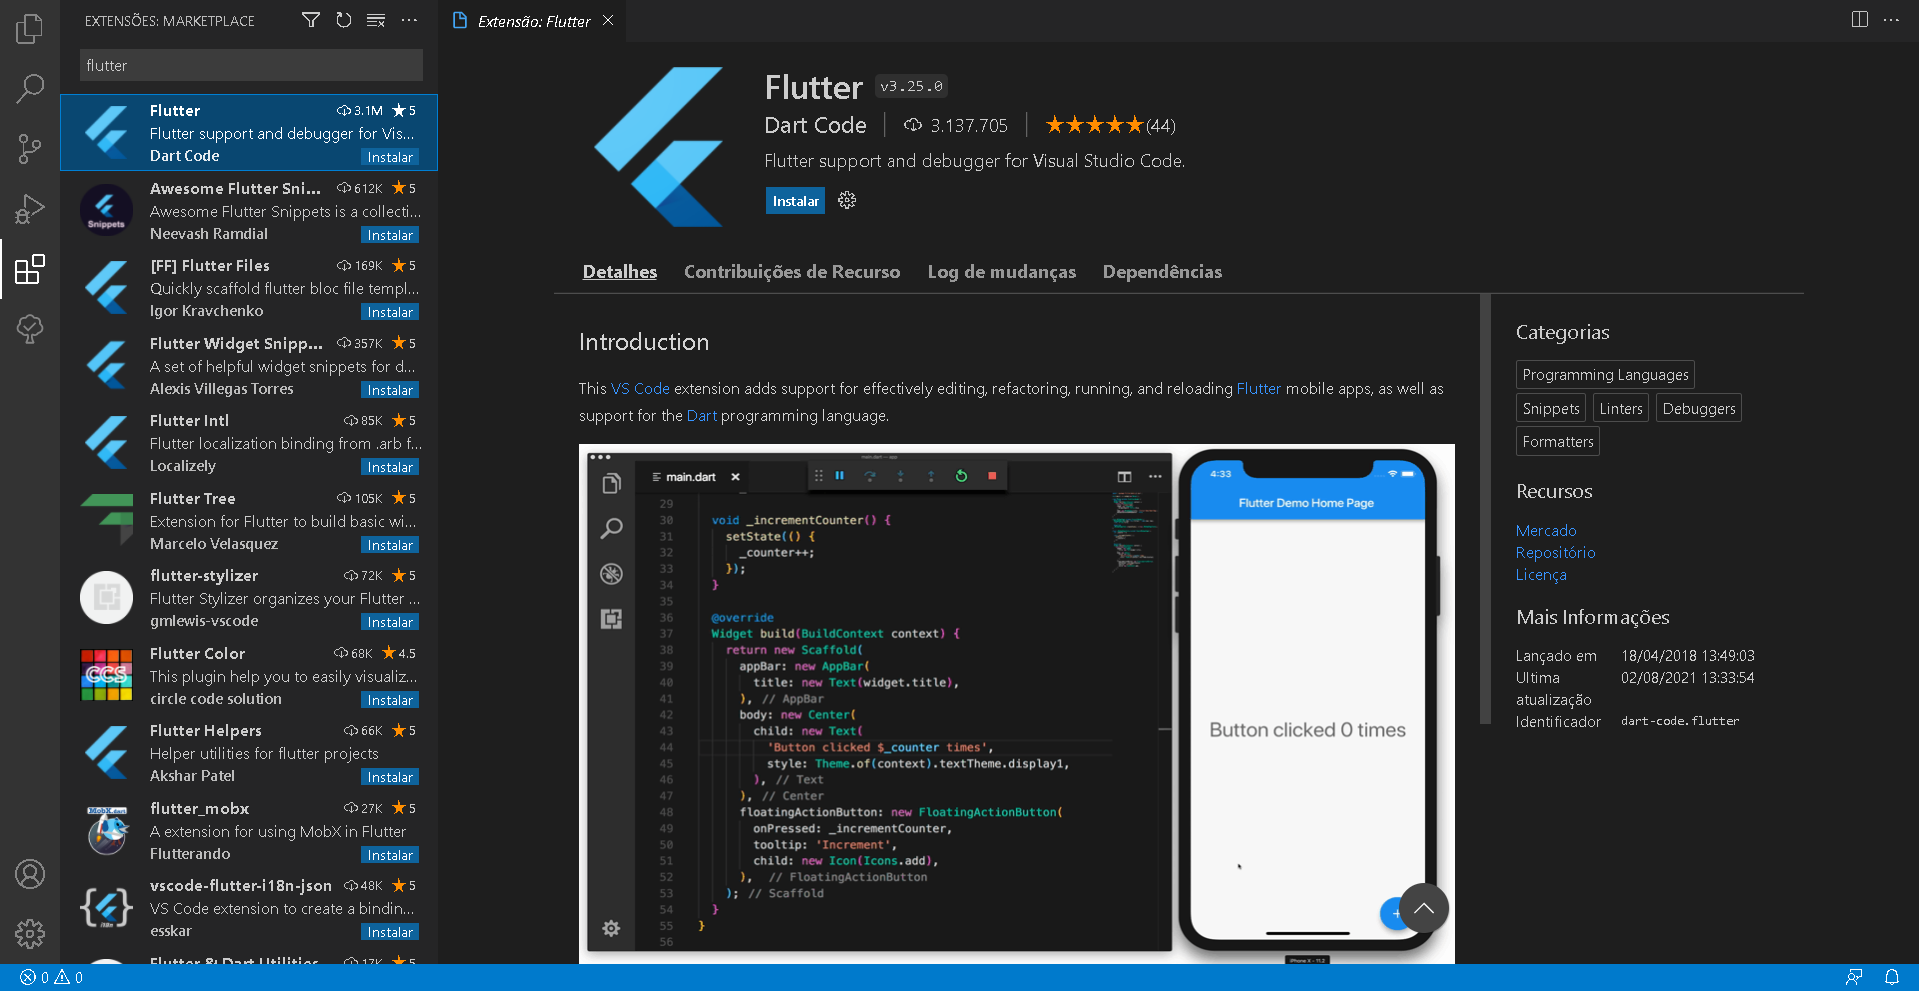 Flutter no Marketplace do VS Code